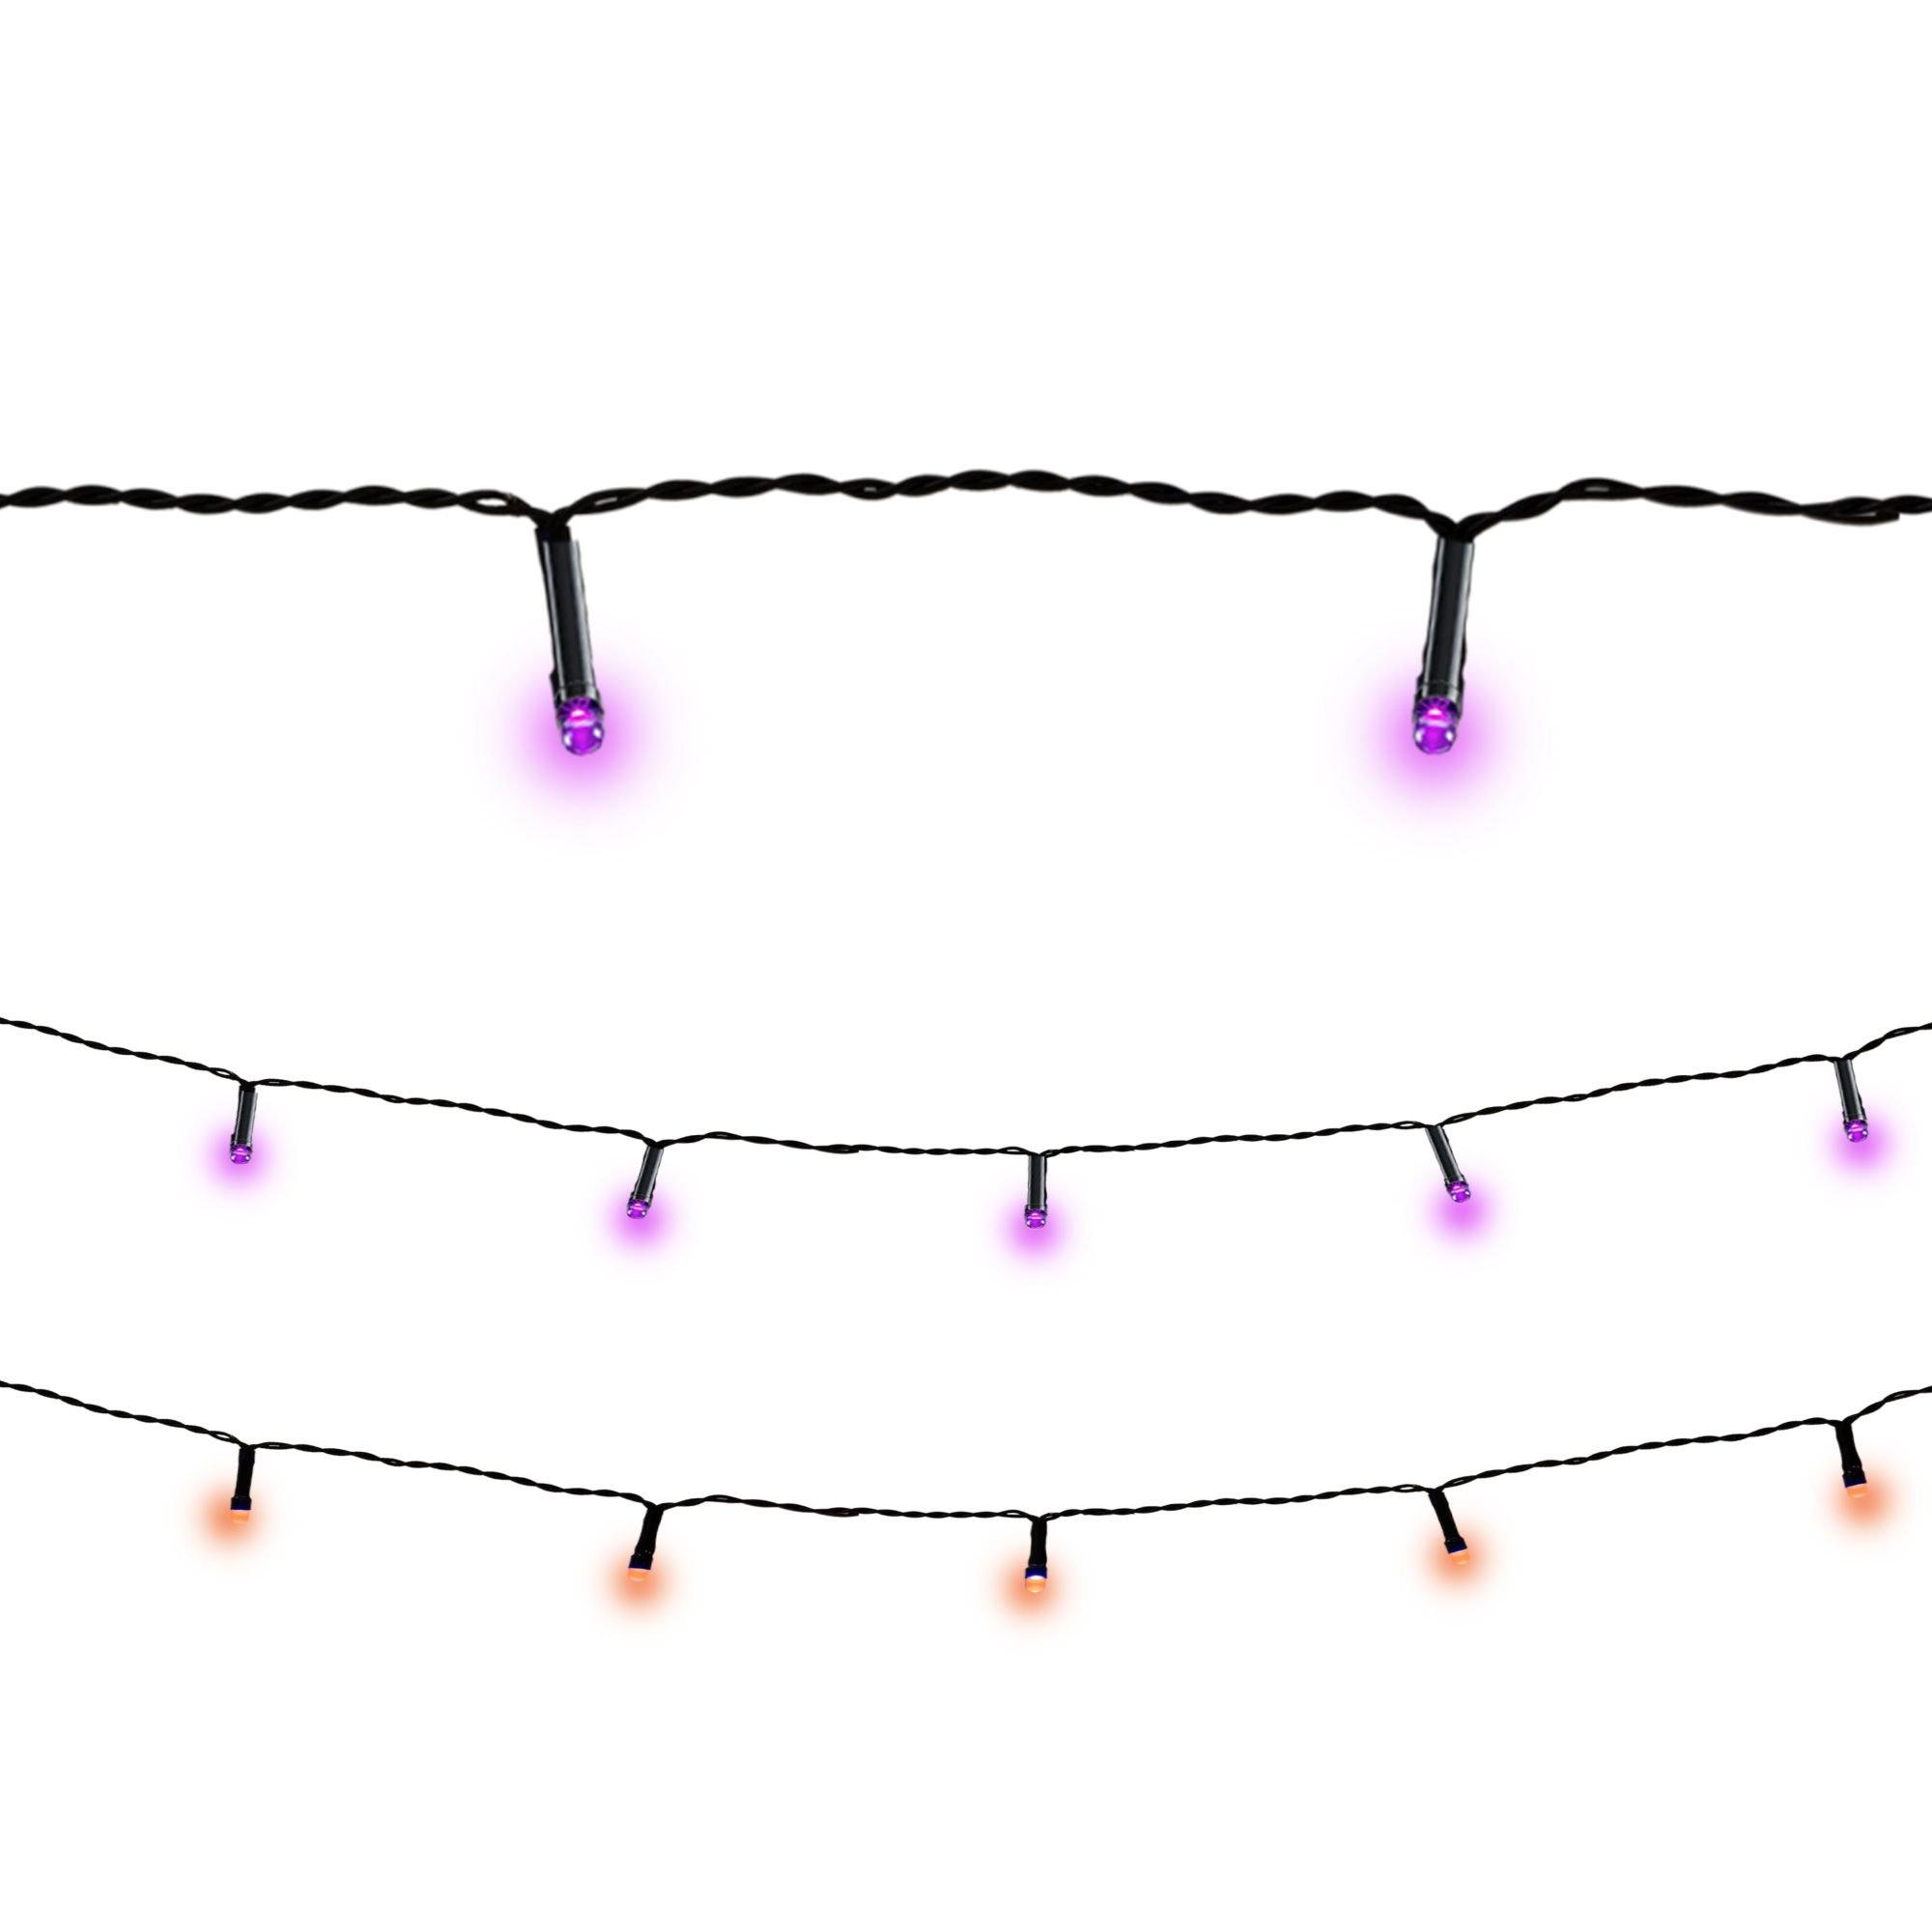 Orange & Purple String Lights